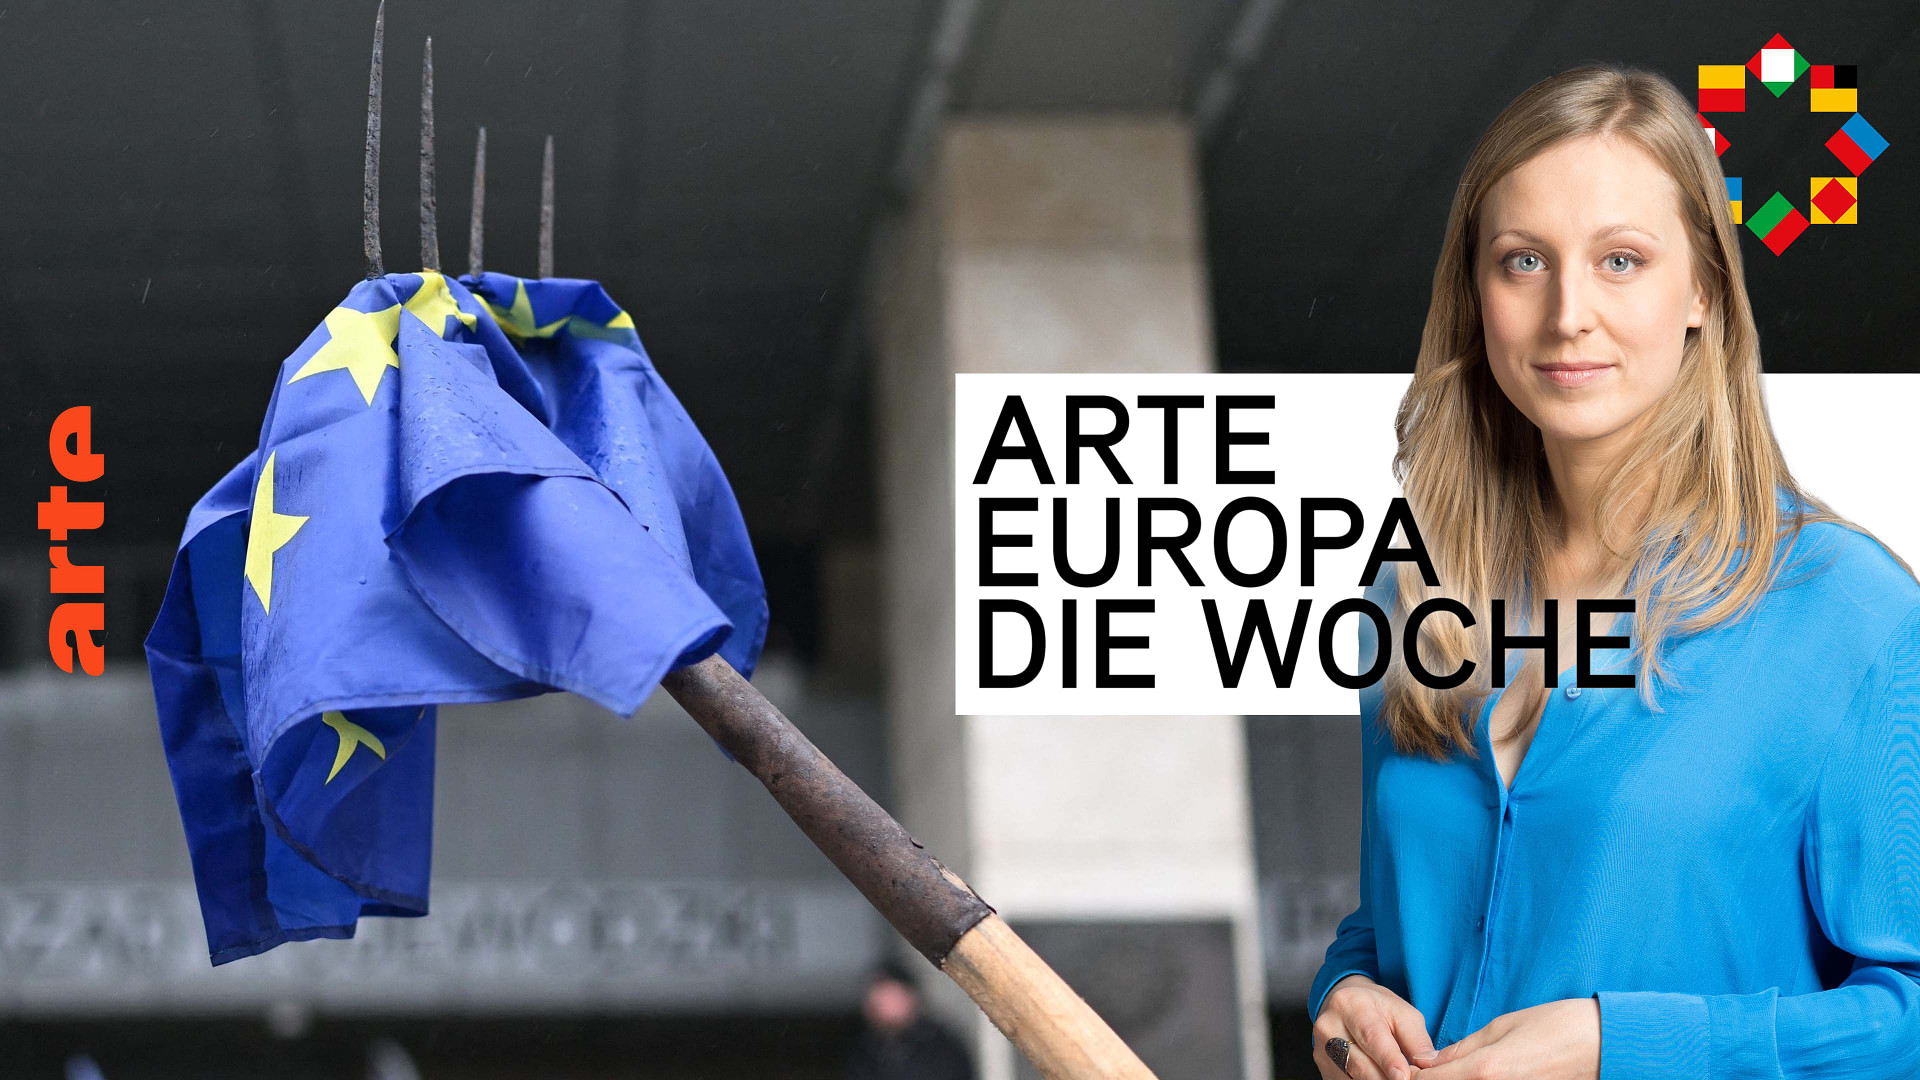 ARTE Europa - Die Woche